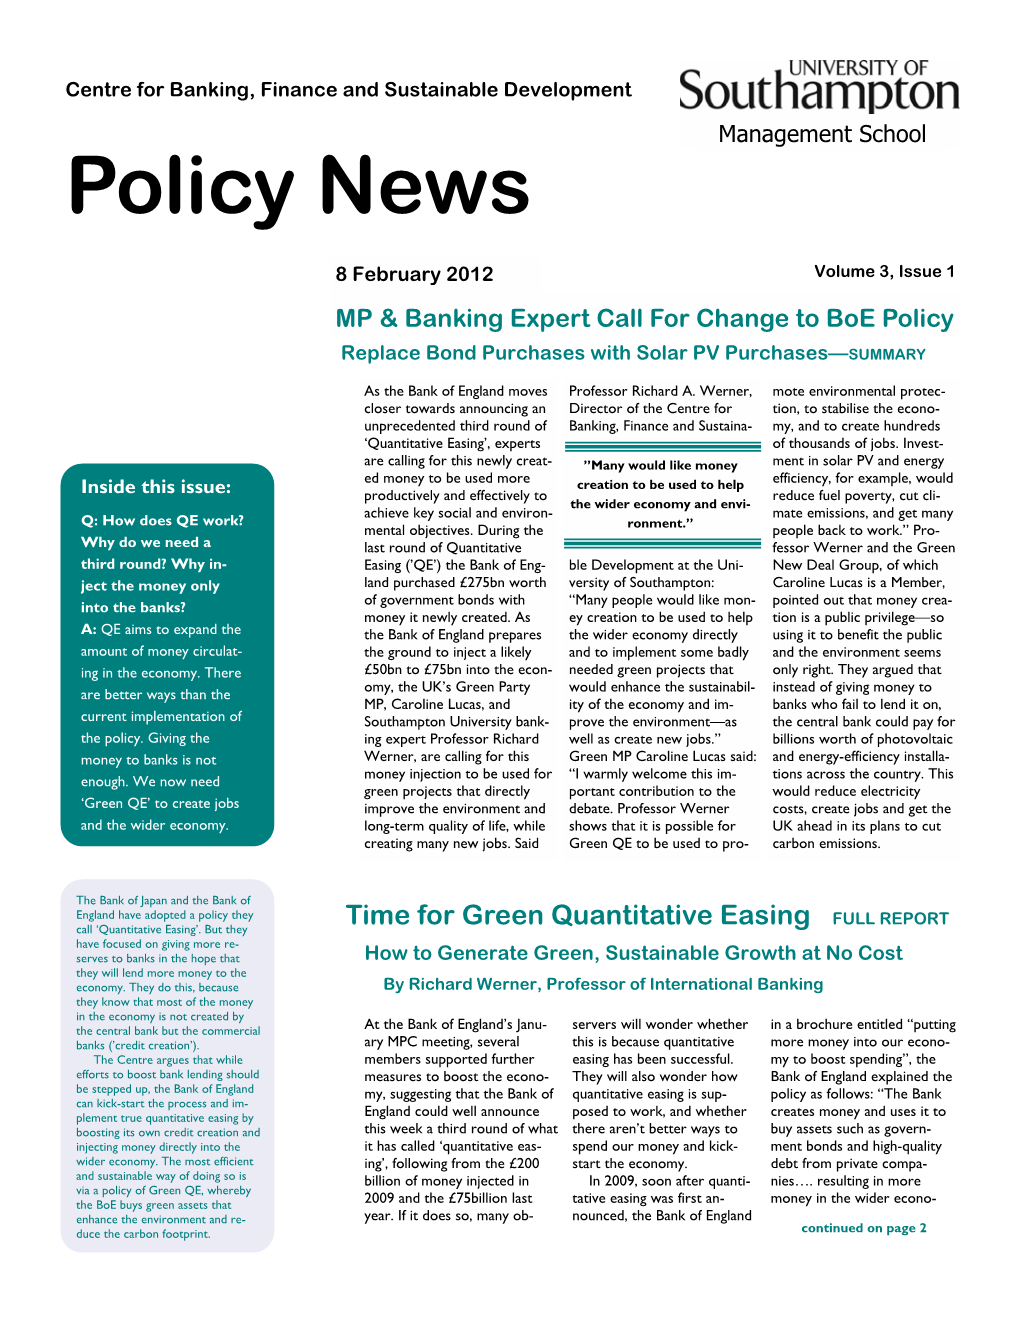 CBFSD Policy News 2012 1.Pub